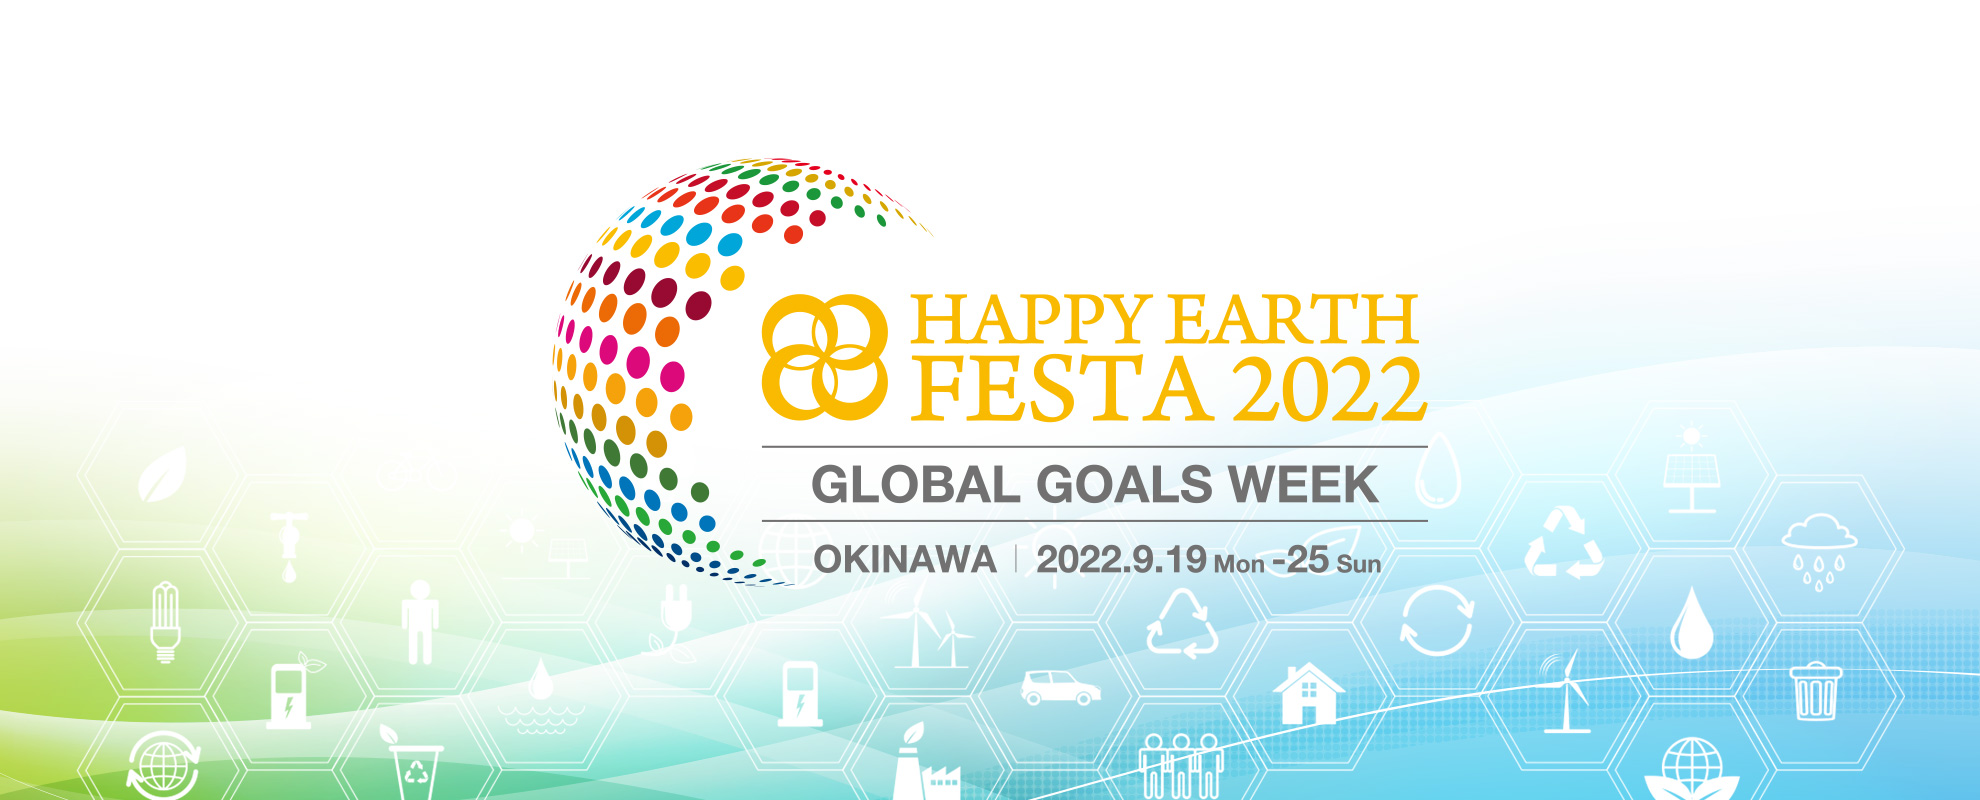 【SDGs週間】HAPPY EARTH FESTA 2022｜GLOBAL GOALS WEEK